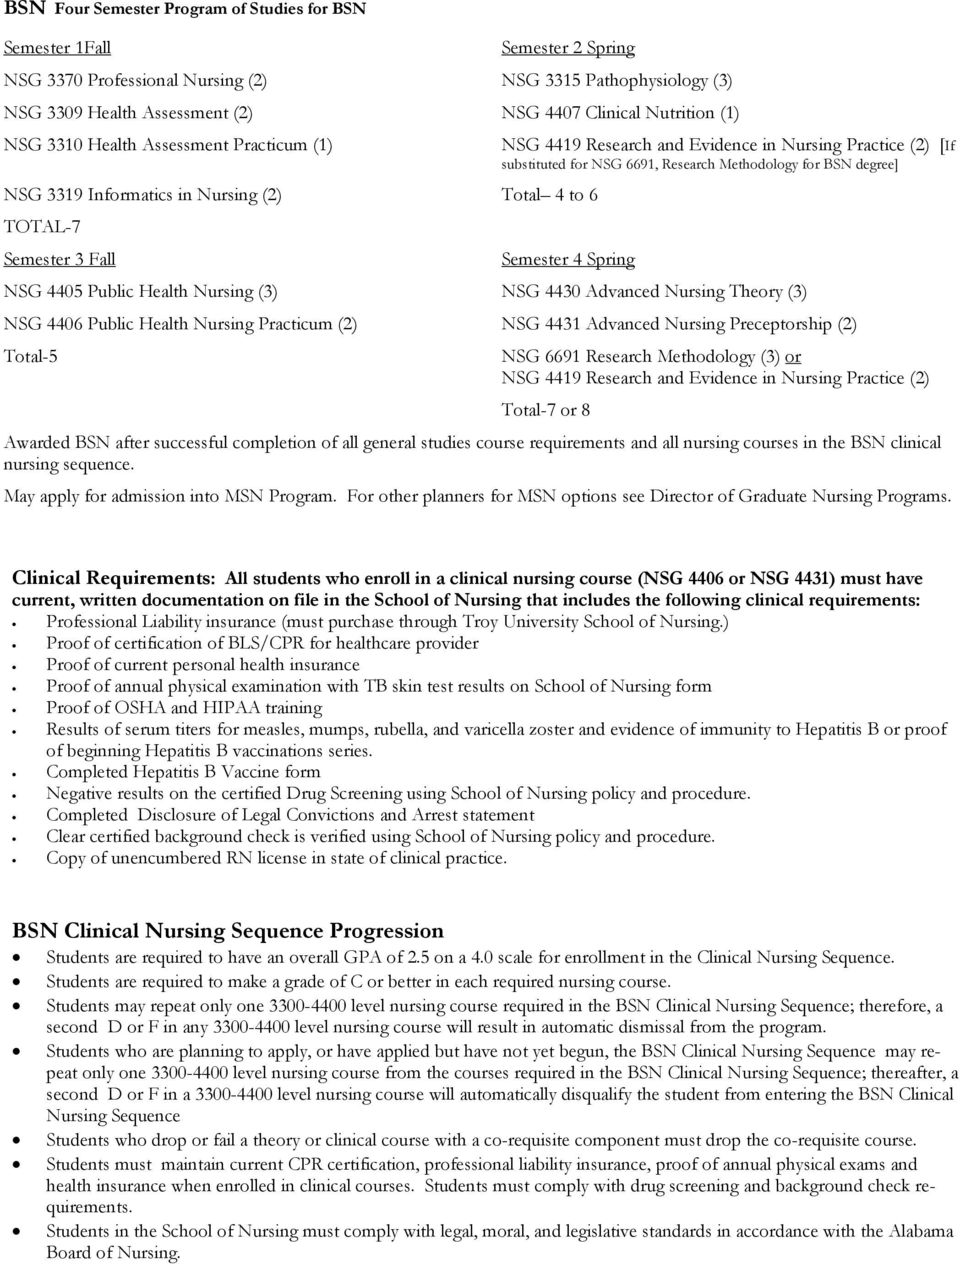 6691, Research Methodology for BSN degree] Semester 4 Spring NSG 4405 Public Health Nursing (3) NSG 4430 Advanced Nursing Theory (3) NSG 4406 Public Health Nursing Practicum (2) NSG 4431 Advanced